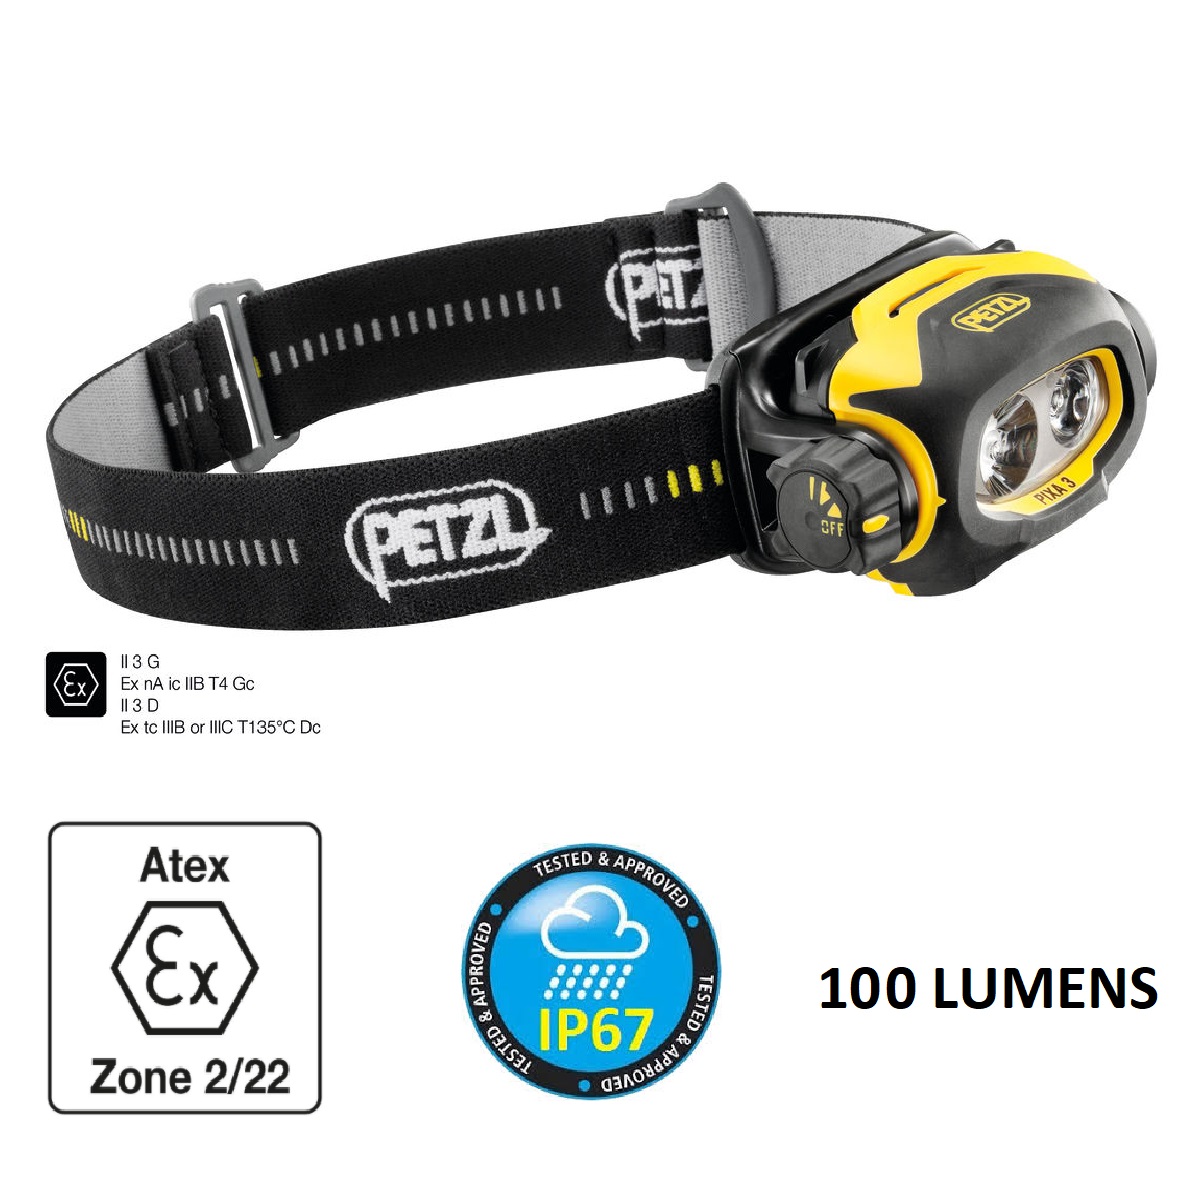 Petzl PIXA 3 LED 100 LUMENS ATEX Hazardous Environment Head Lamp 2 X AA Batteries Included